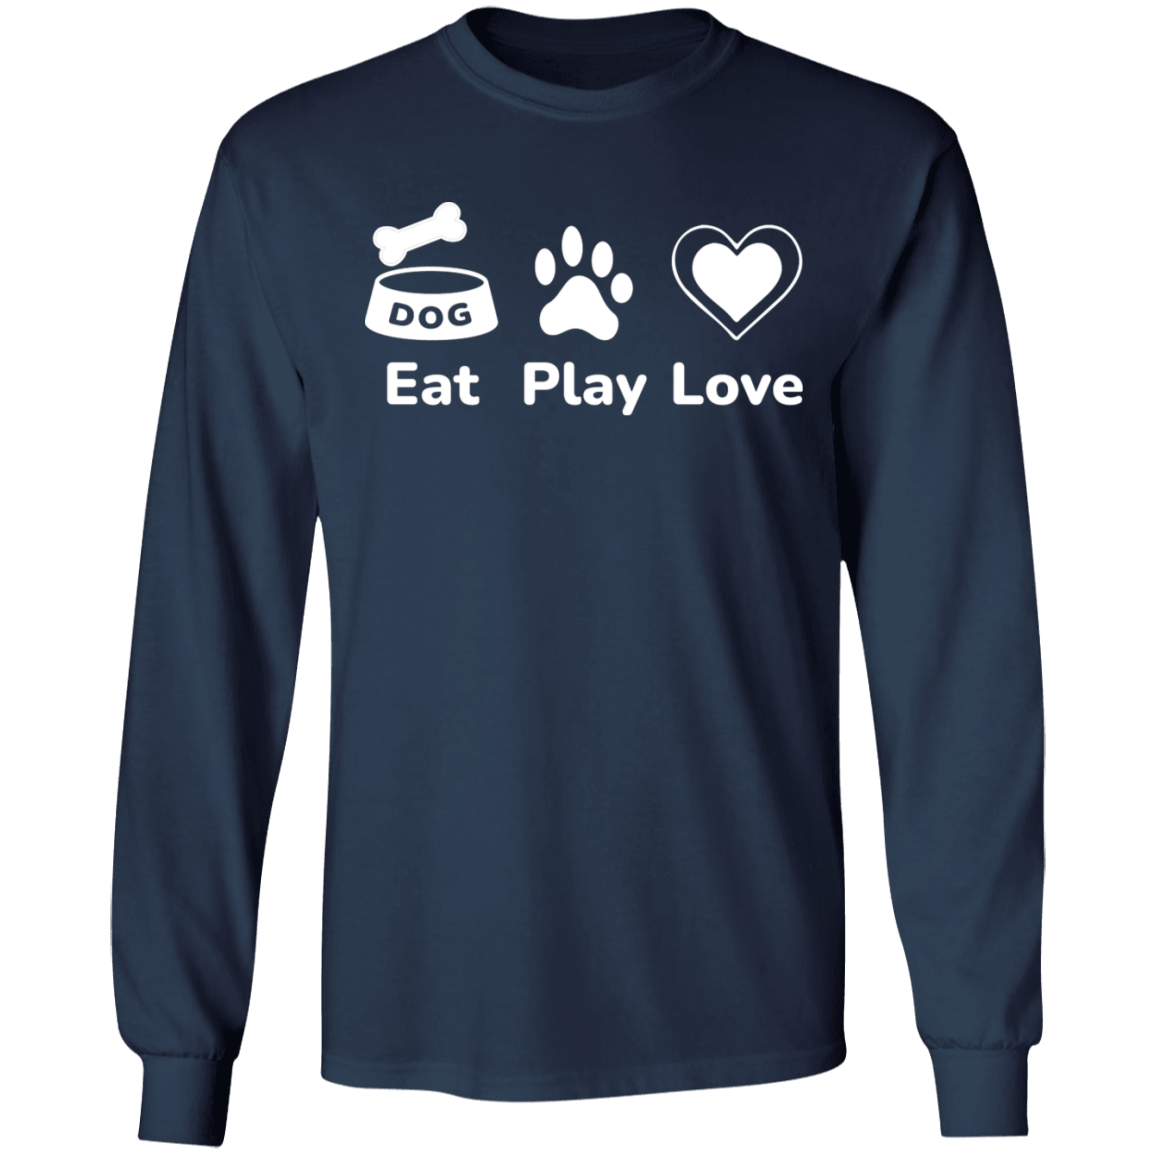 Eat Play Love - Long Sleeve T Shirt.